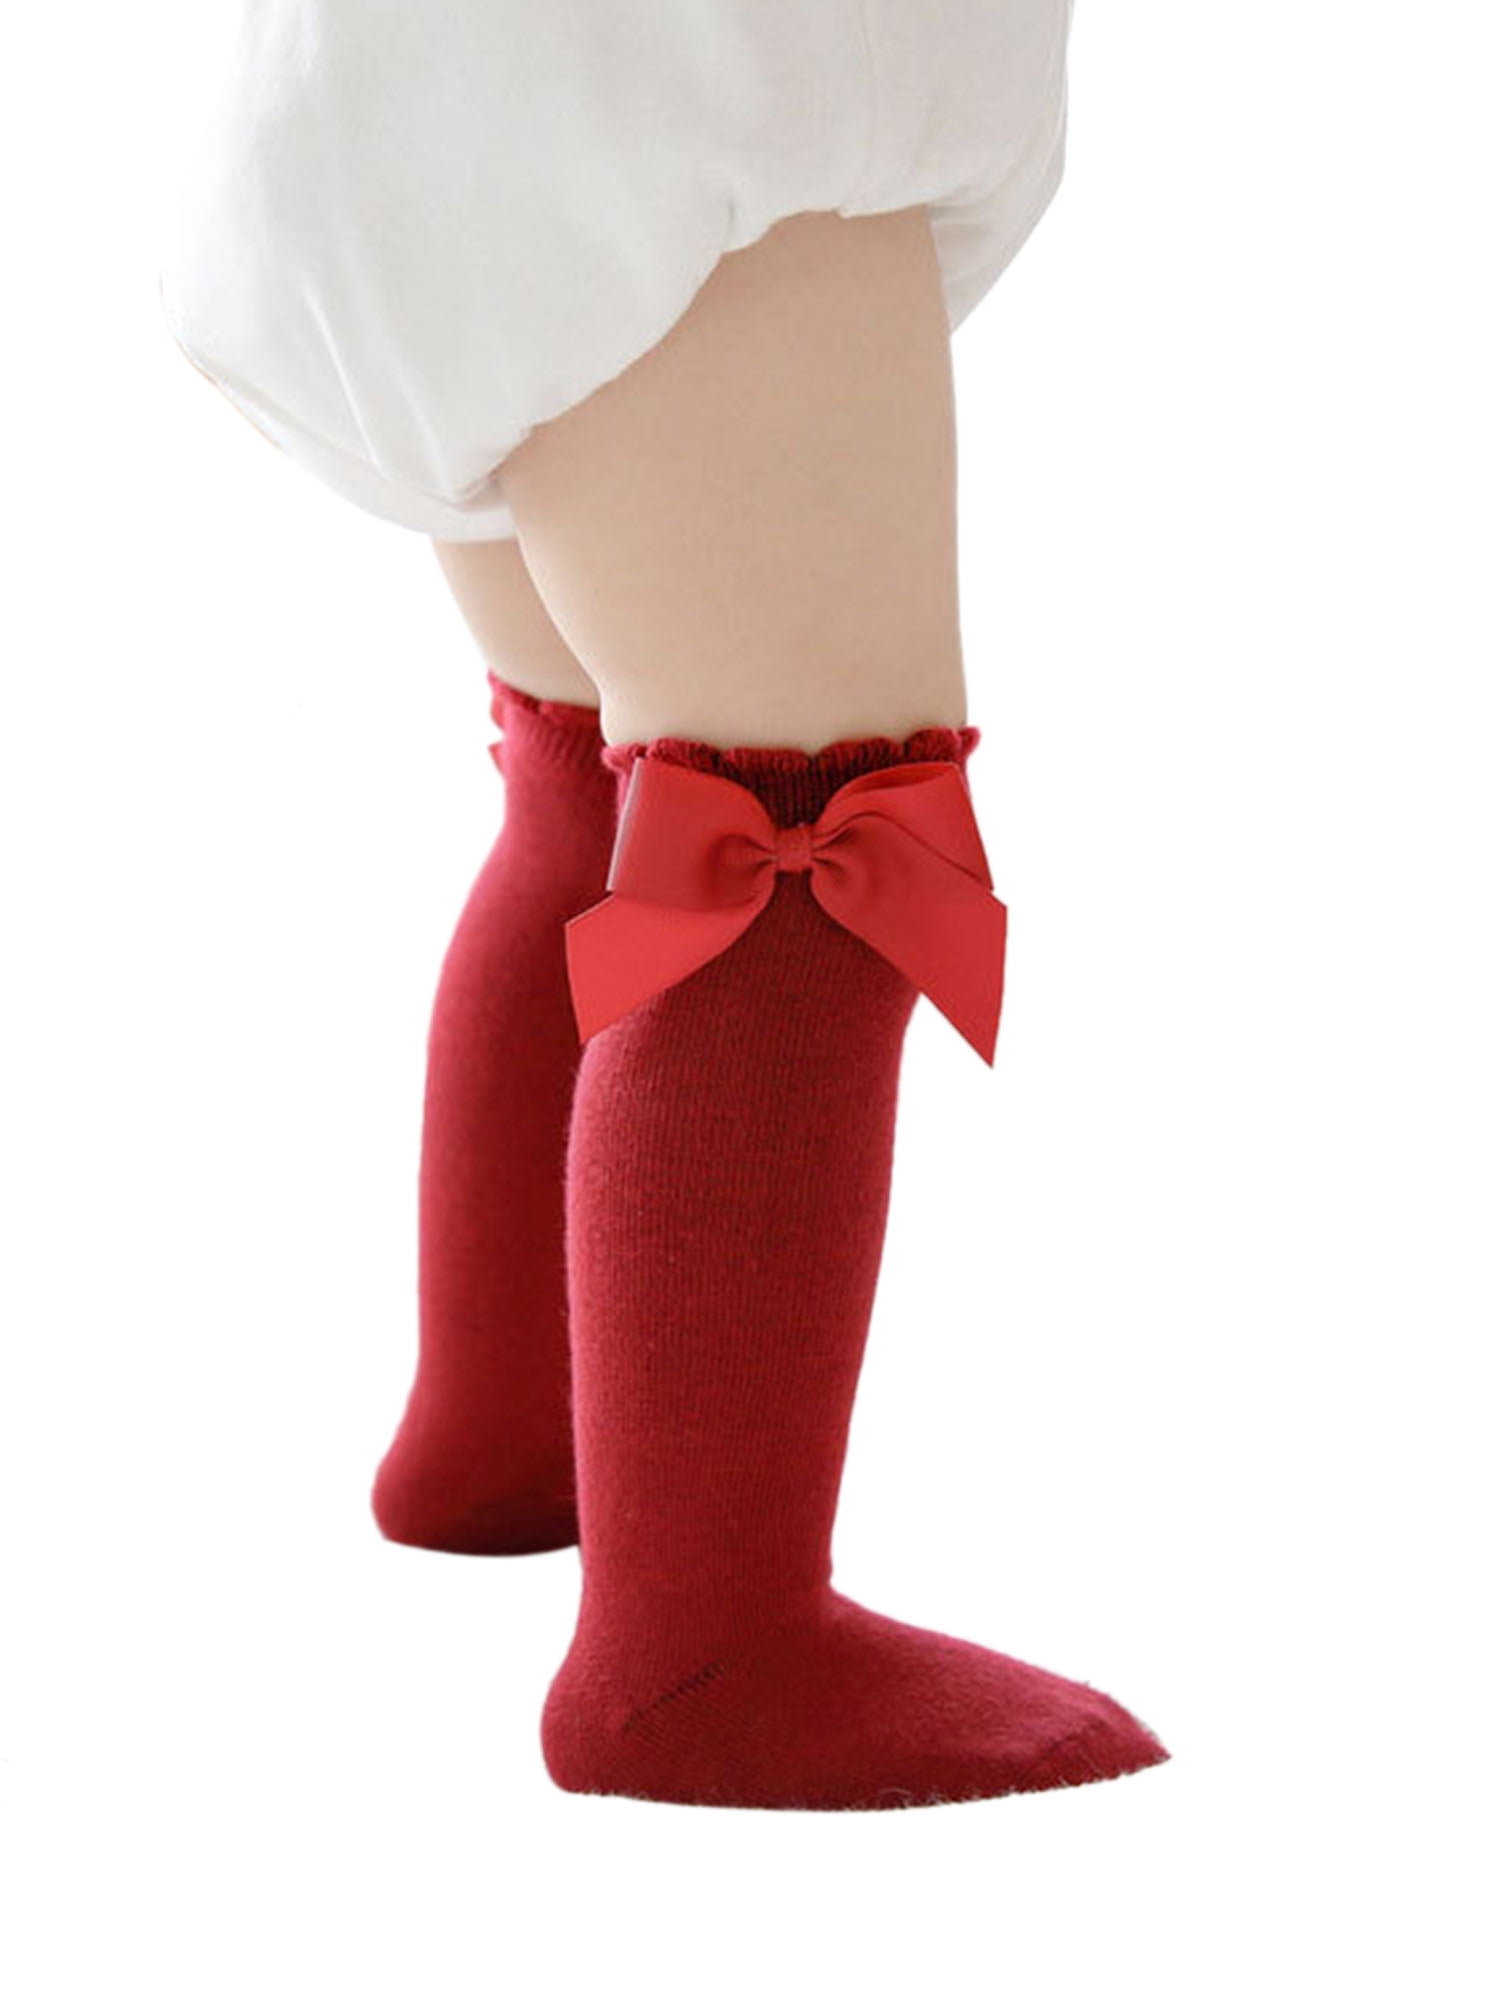 Louis Vuitton 3 Socks Set Red White Cotton. Size 6 Months